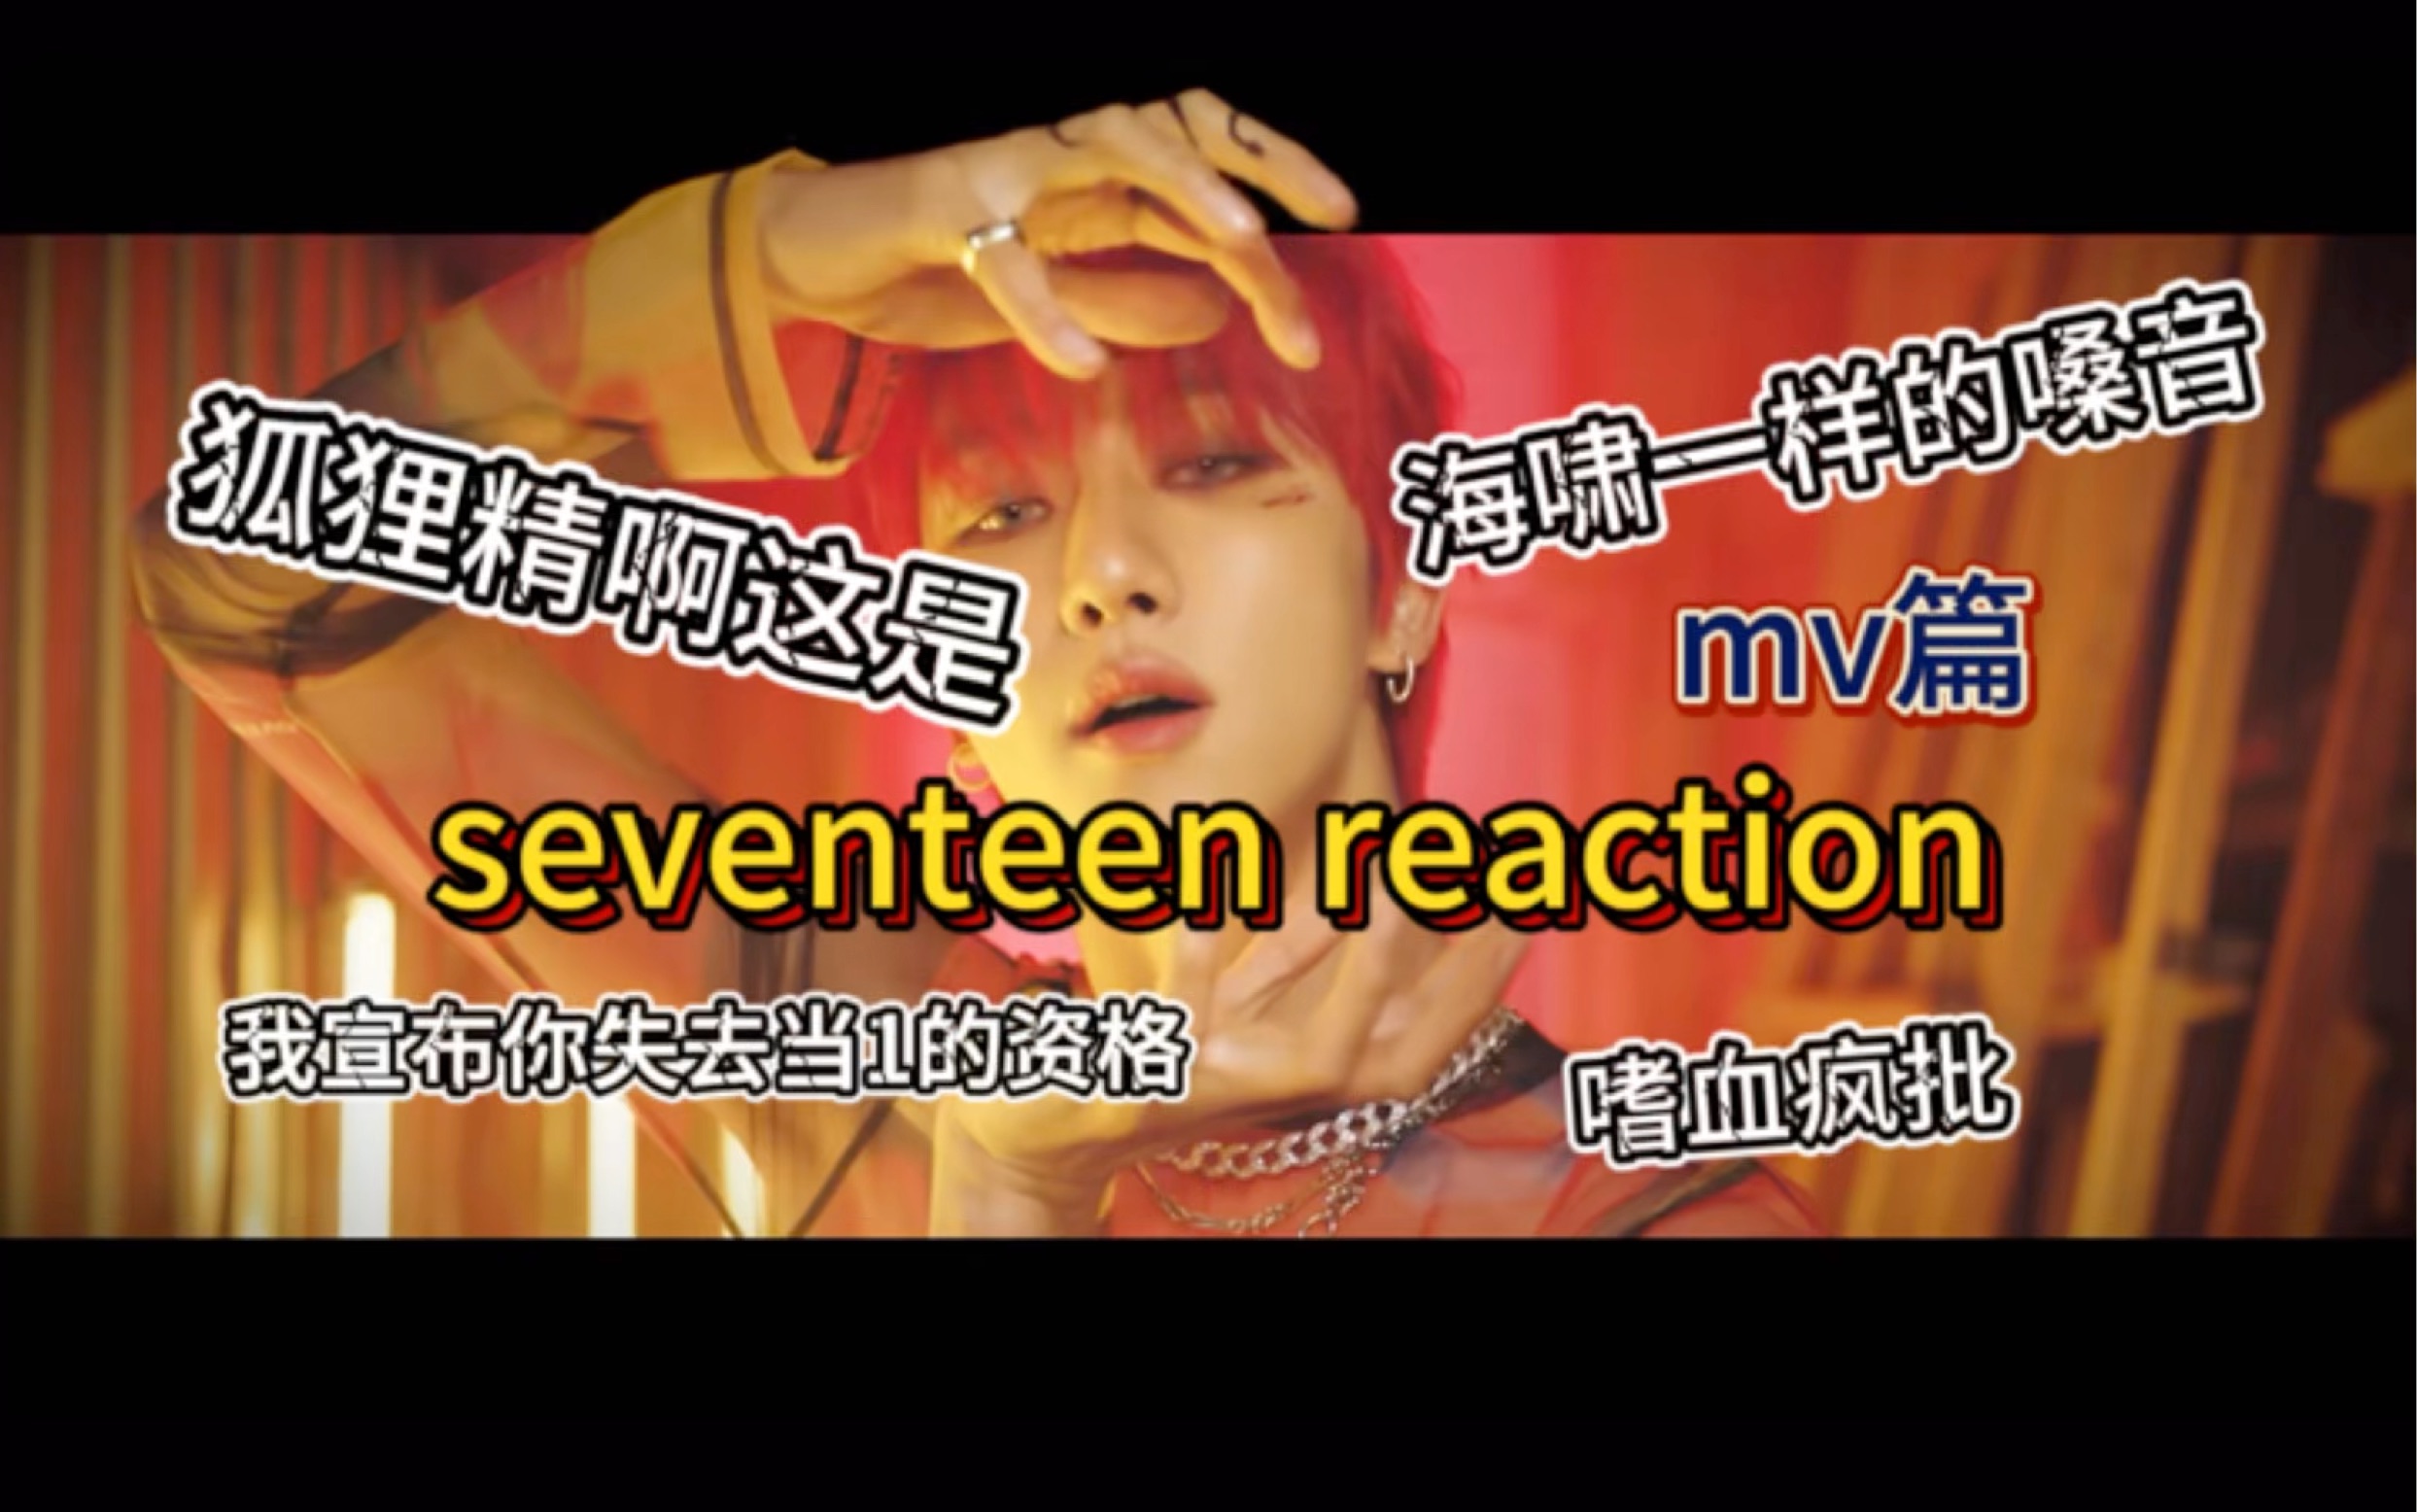 【seventeen reaction】让二次元写手朋友挑封面看mv